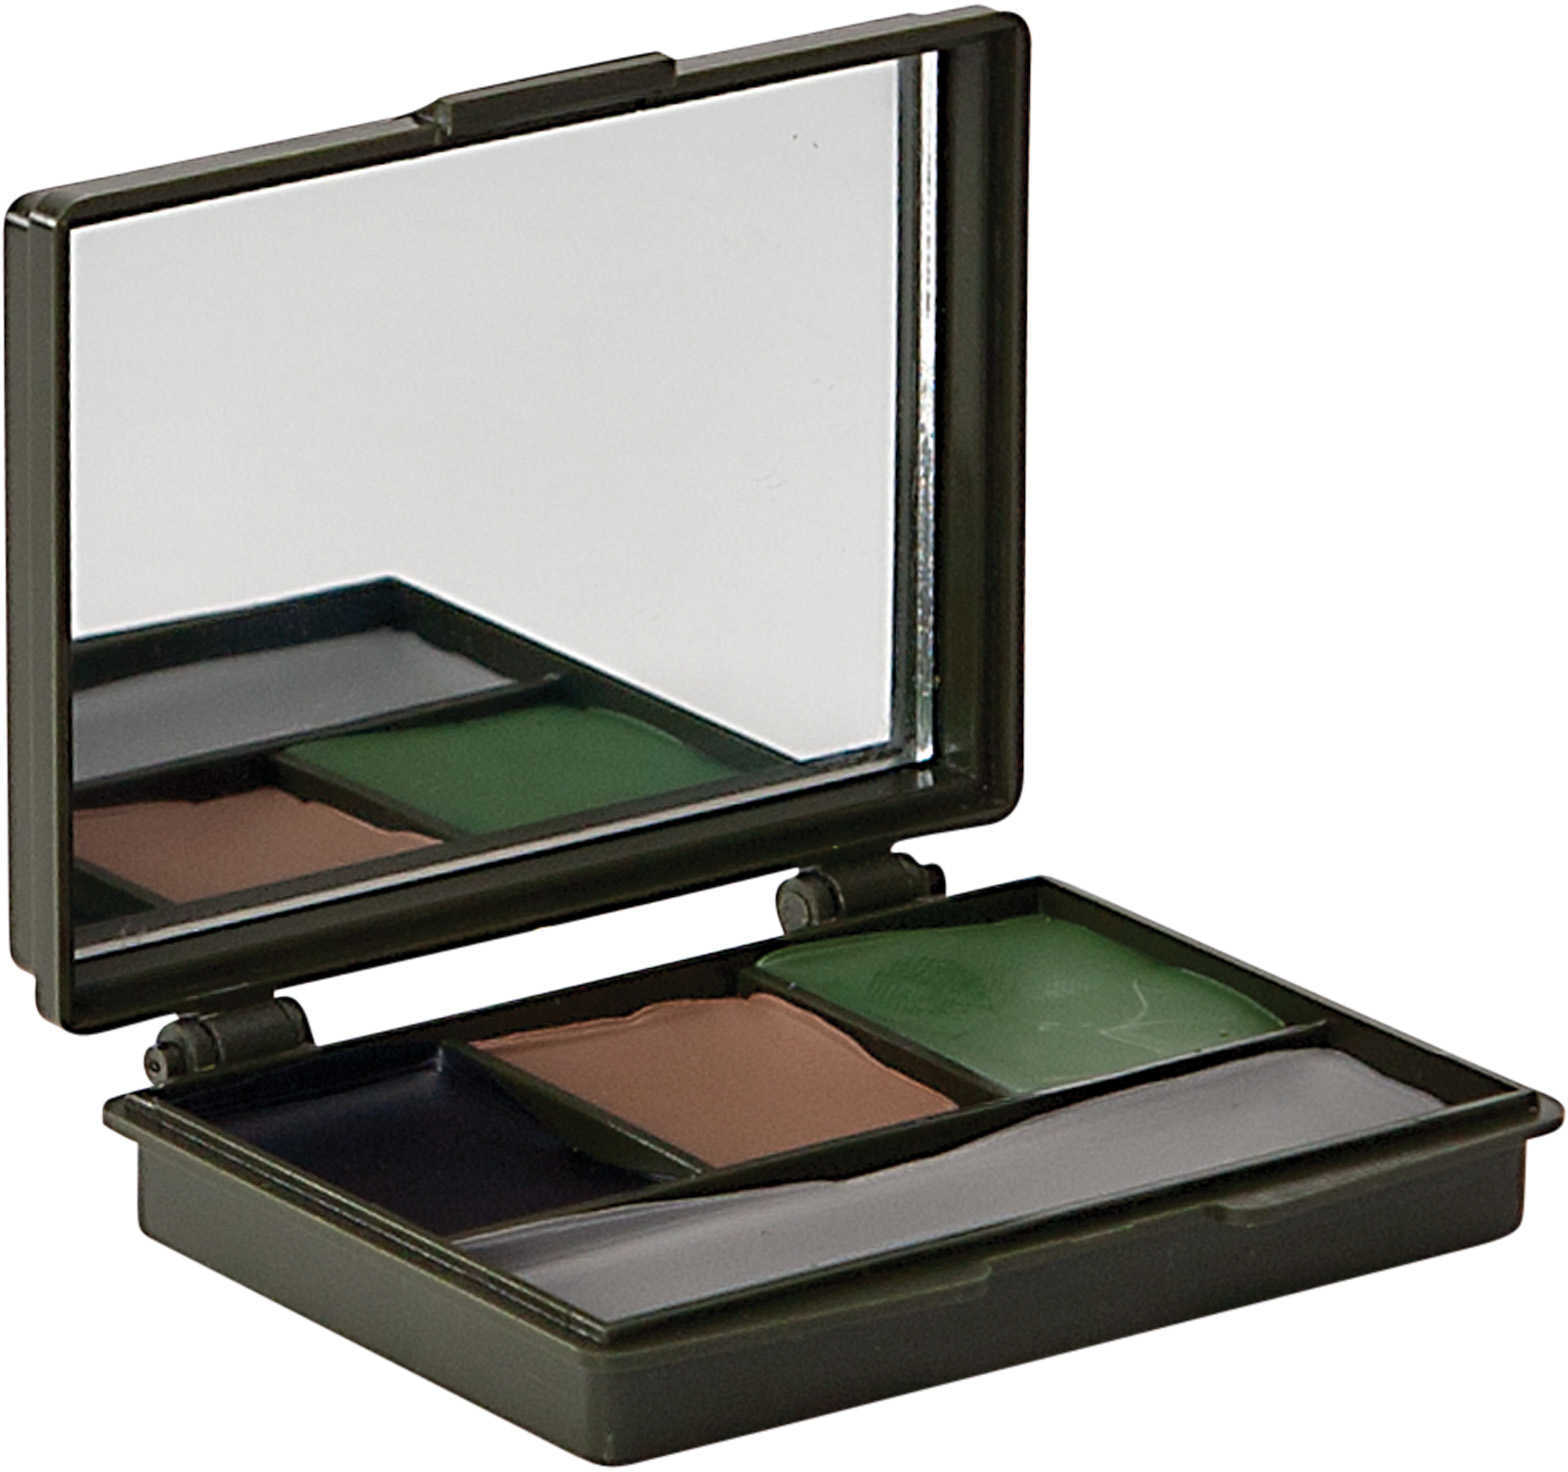 Allen Cases Camo Makeup Kit-Olive Drab Black Brown Gray Md: 61